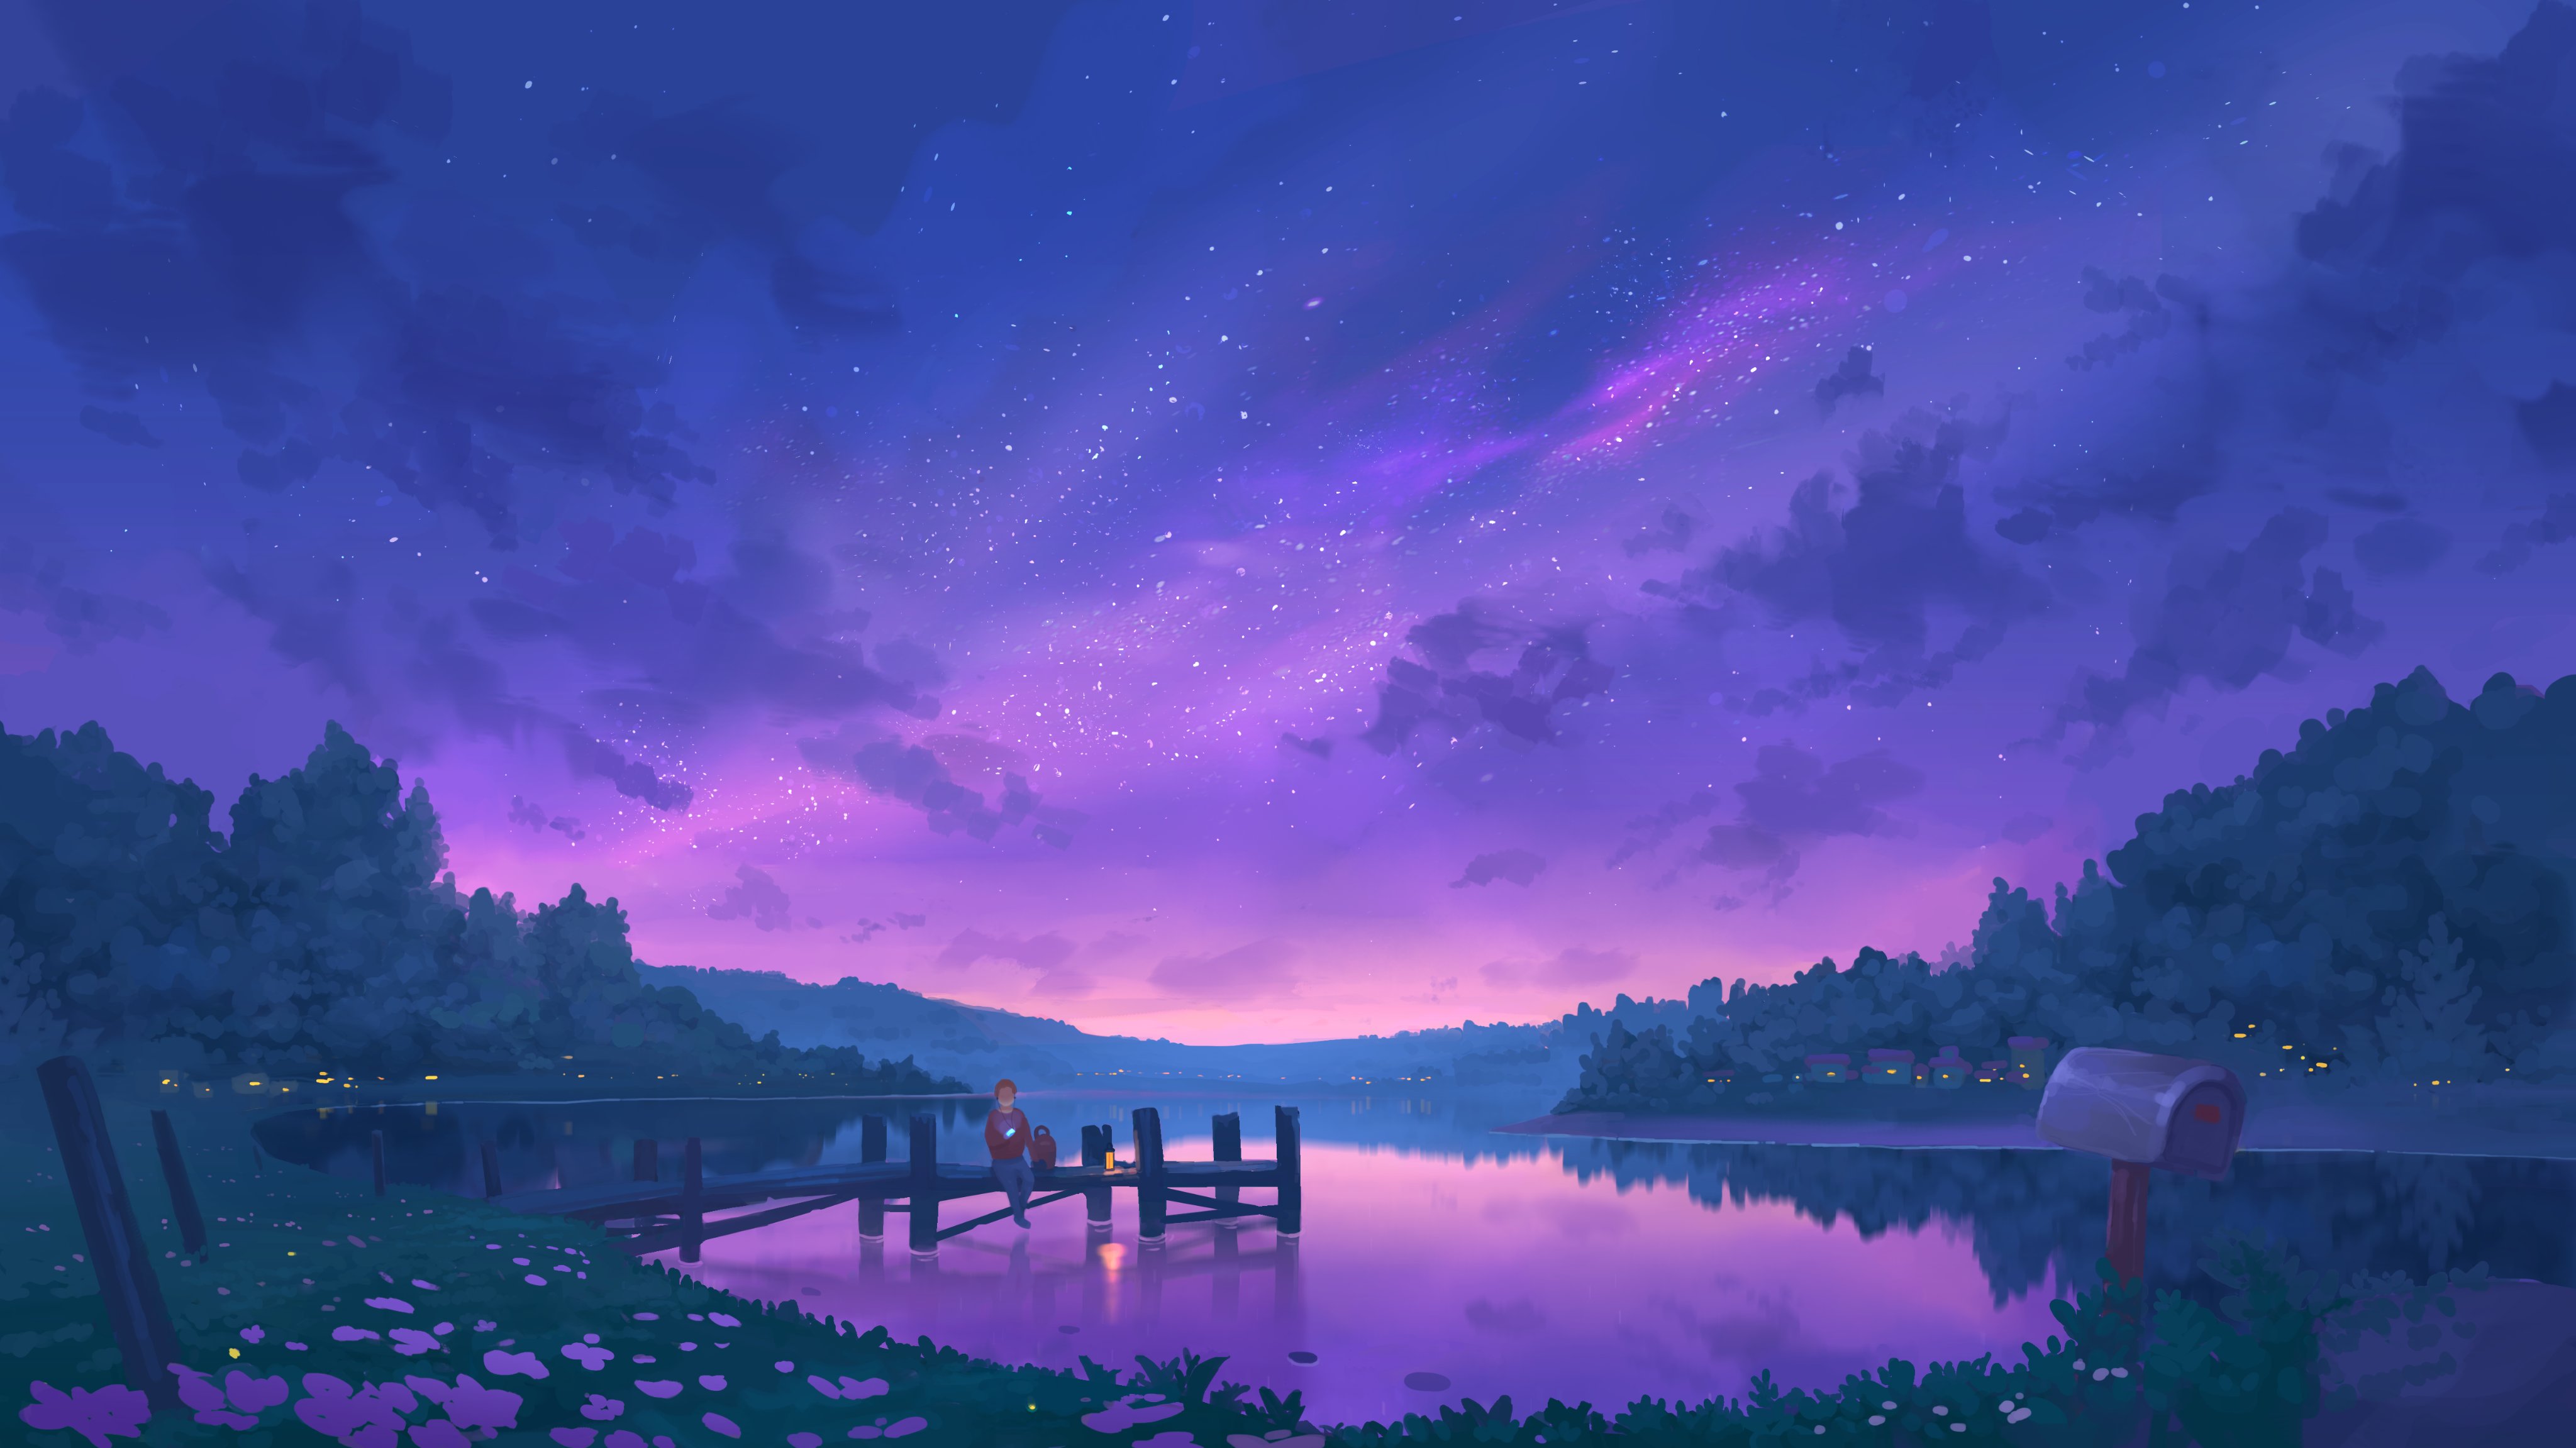 General 4096x2303 artwork night stars lake dock purple blue starred sky pier calm